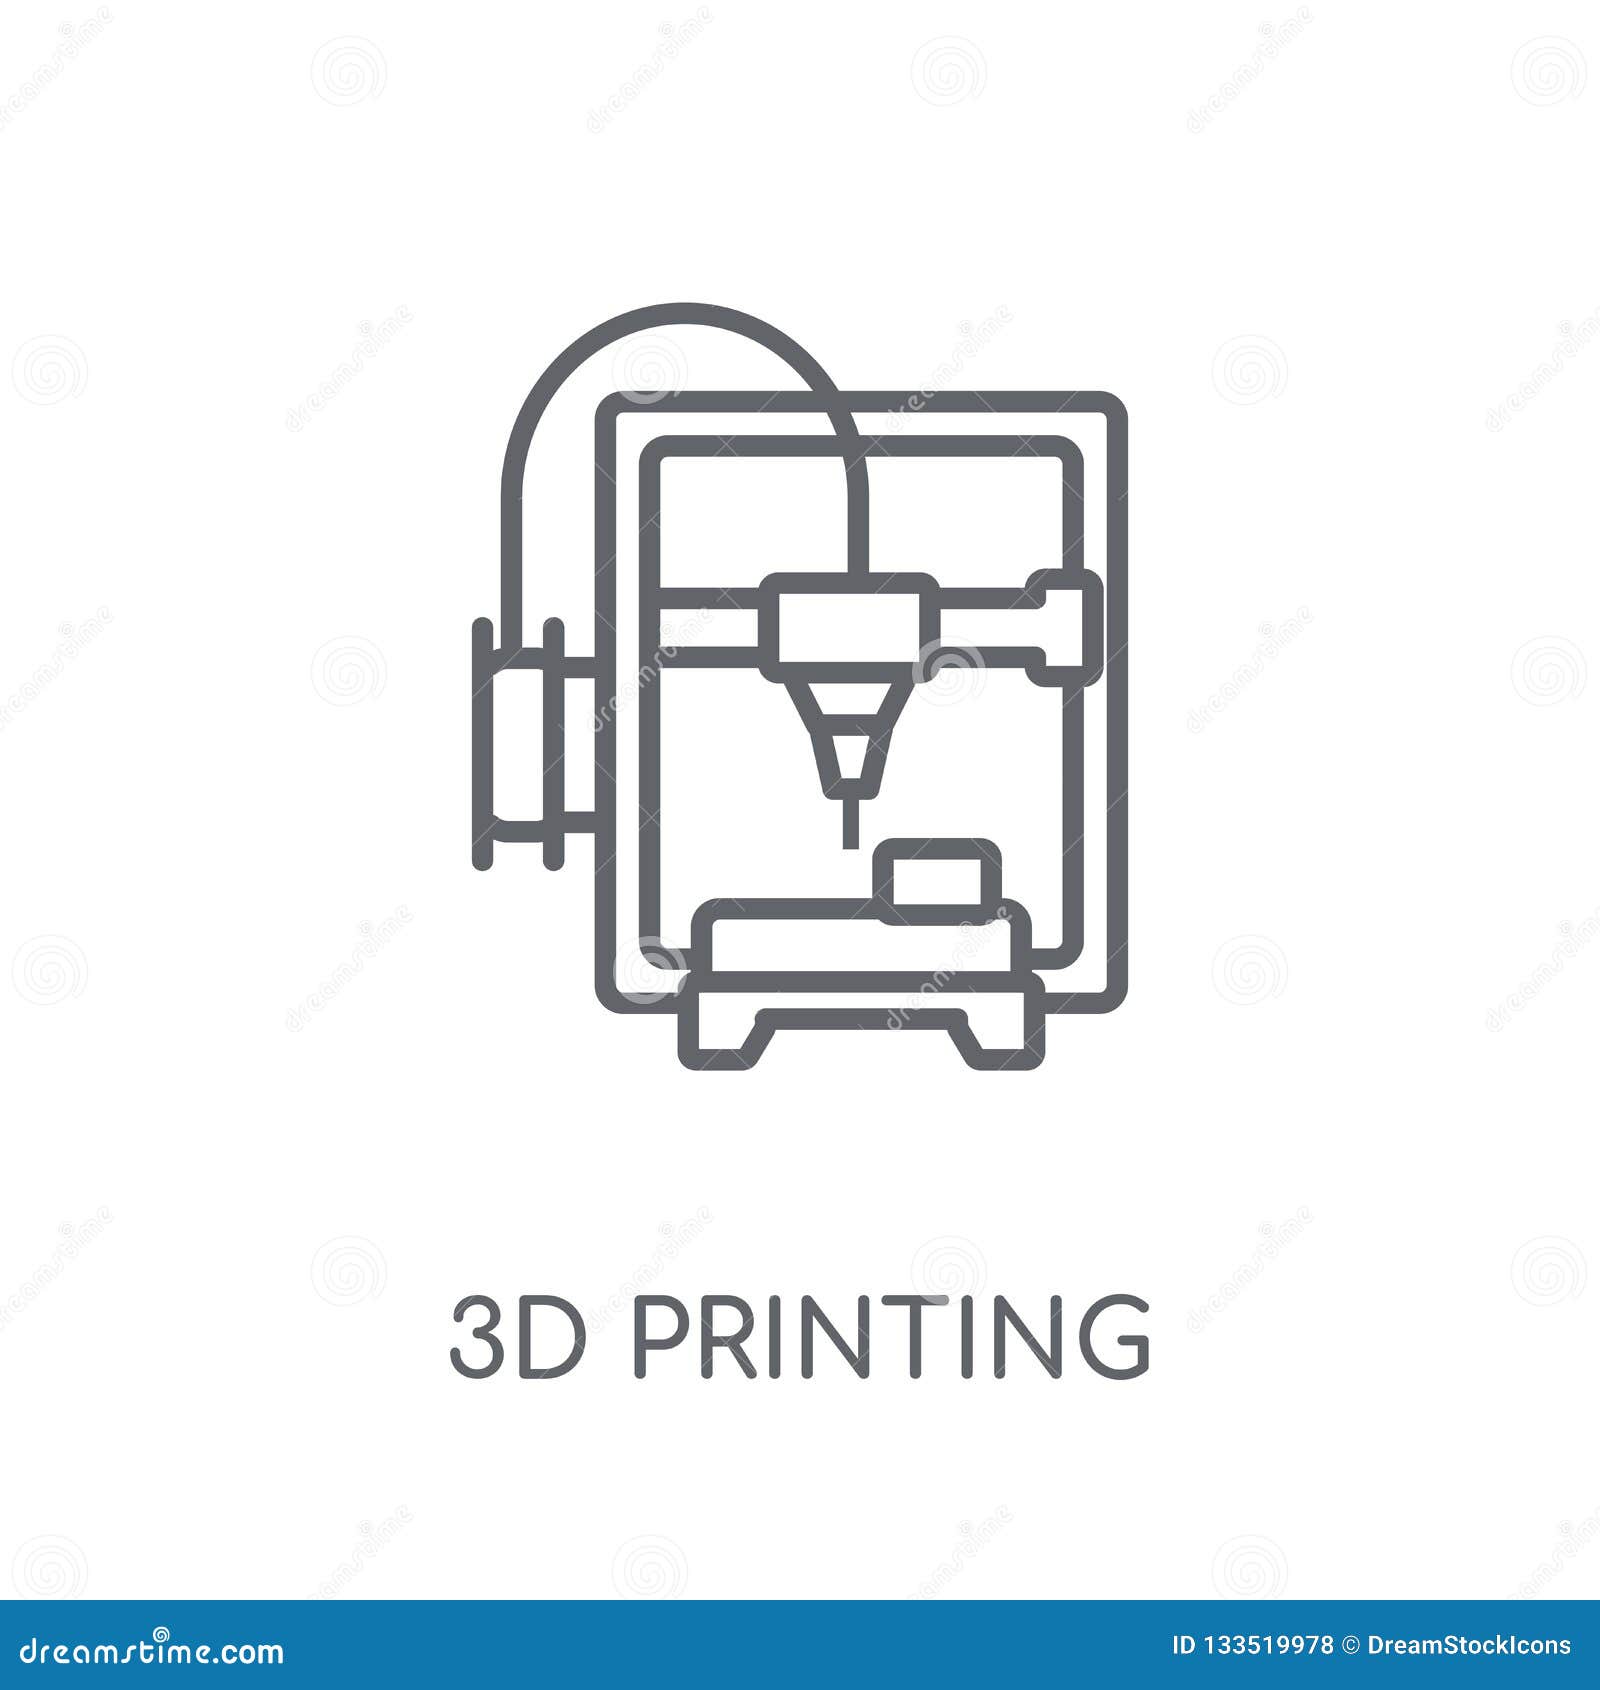 Logos For 3d Printing